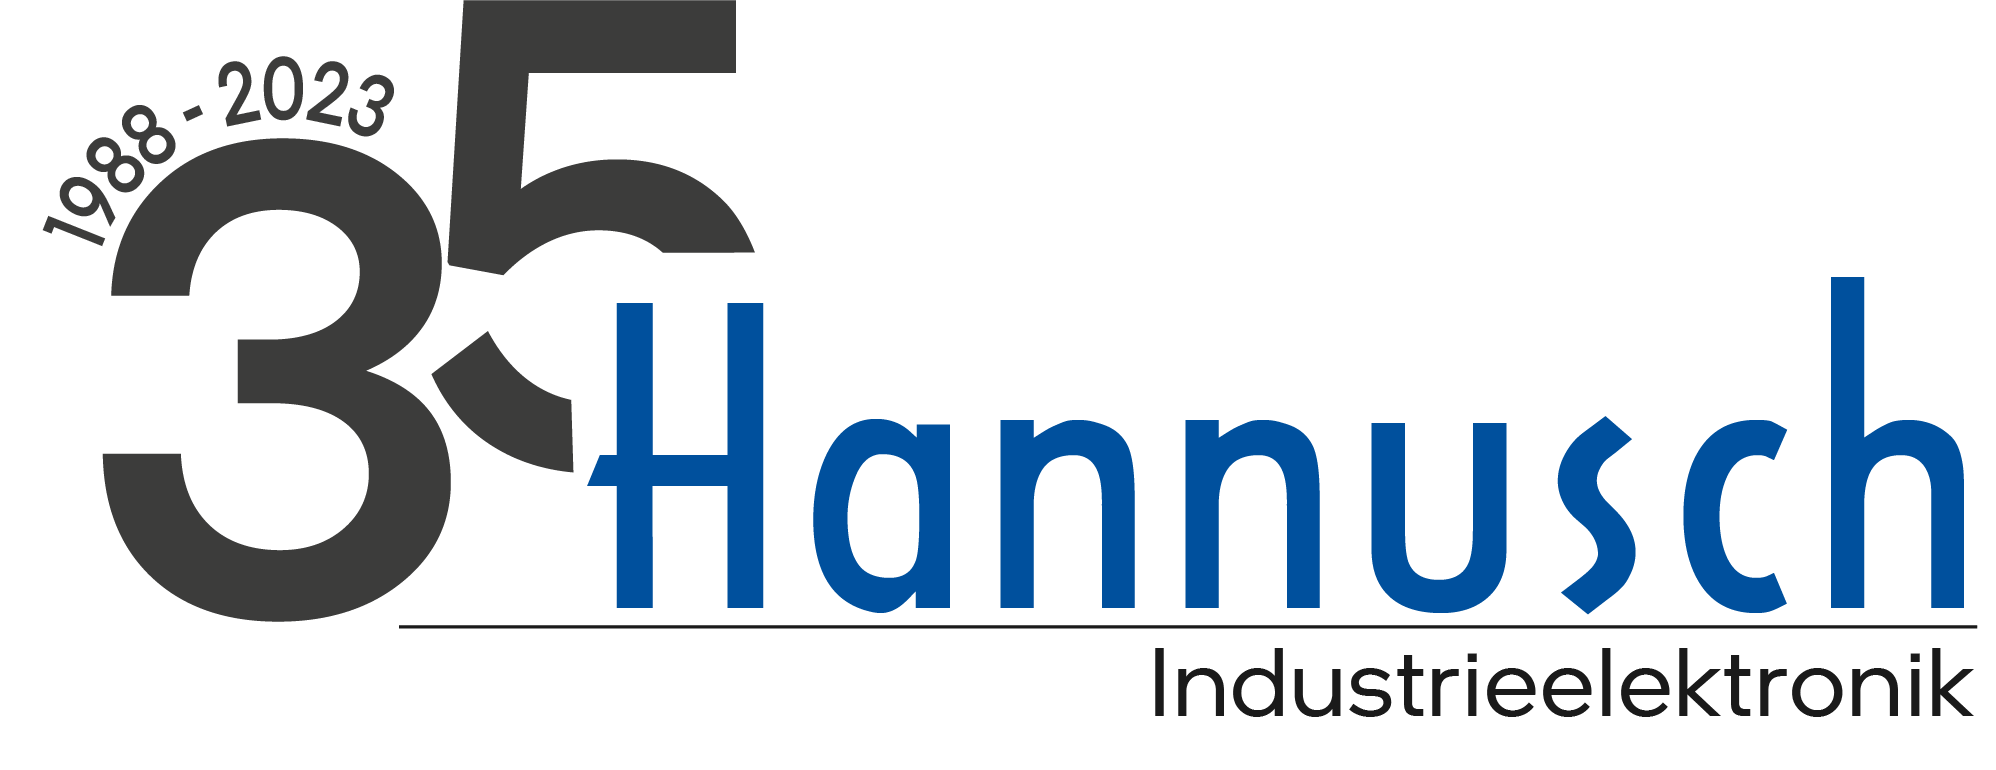 Hannusch Industrieelektronik GmbH